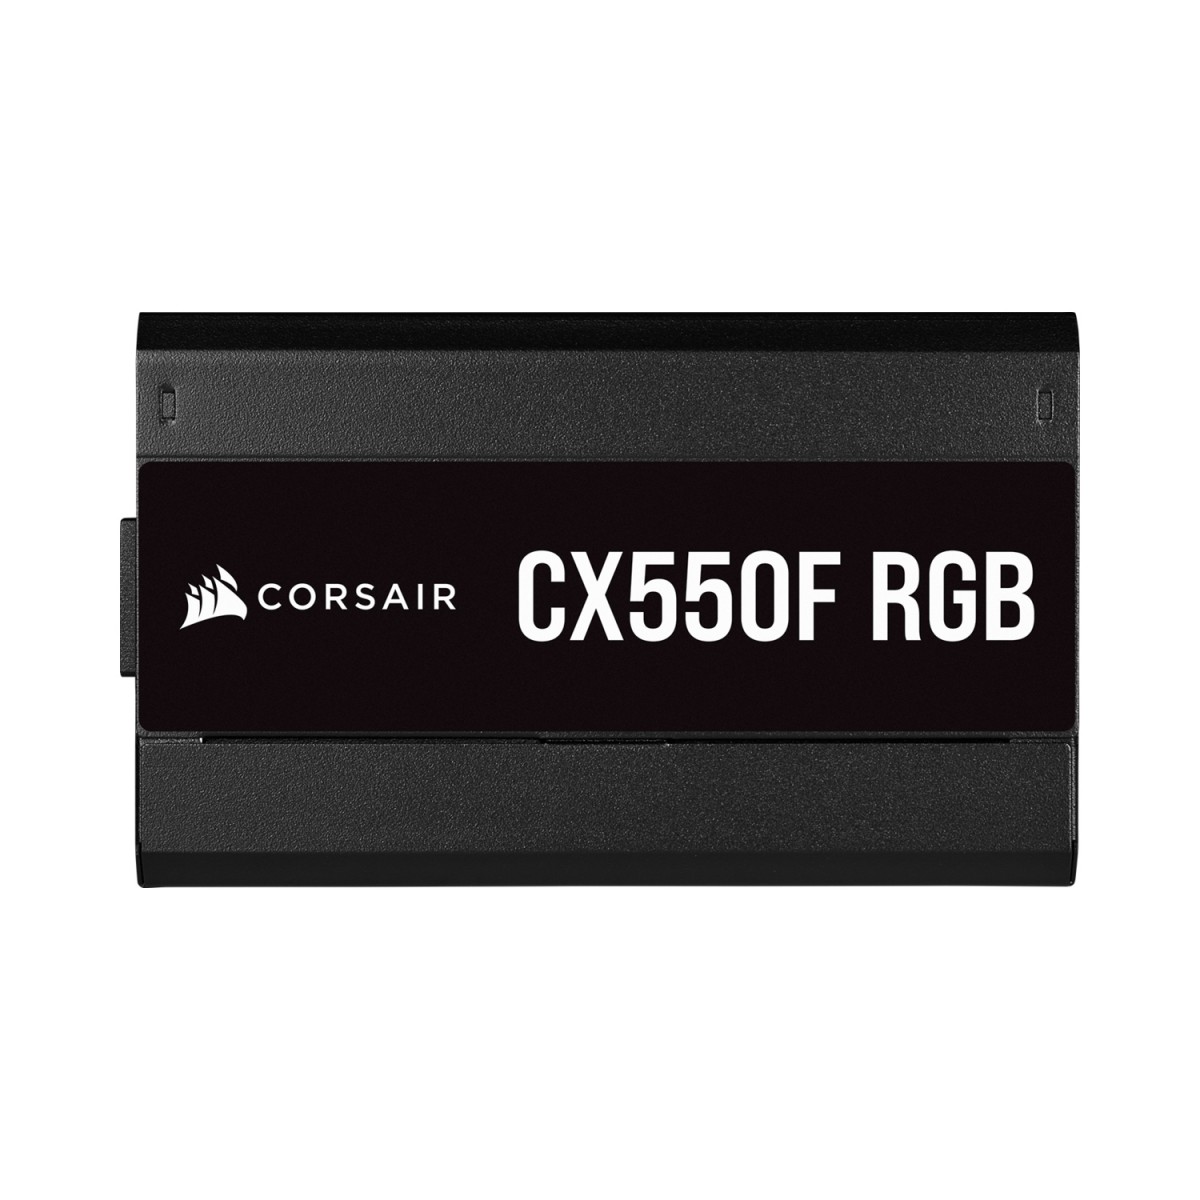 Fonte Corsair CX550F RGB 550W, 80 Plus Bronze, Modular, CP-9020216-BR